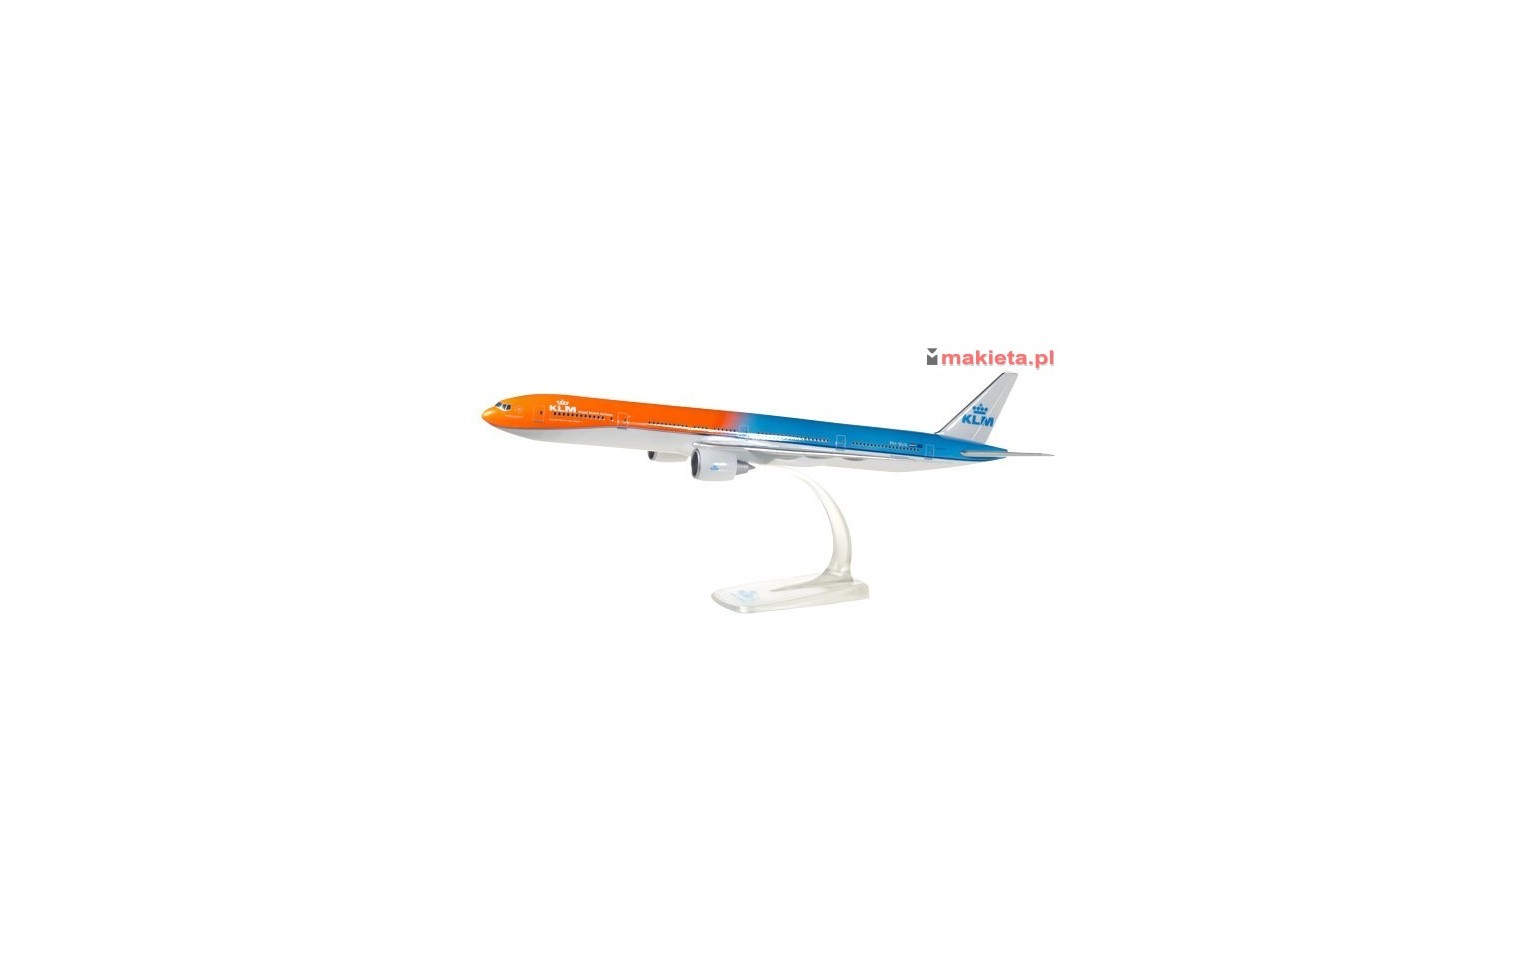 Herpa 611275, KLM Boeing 777-300ER "Orange Pride", 1:200